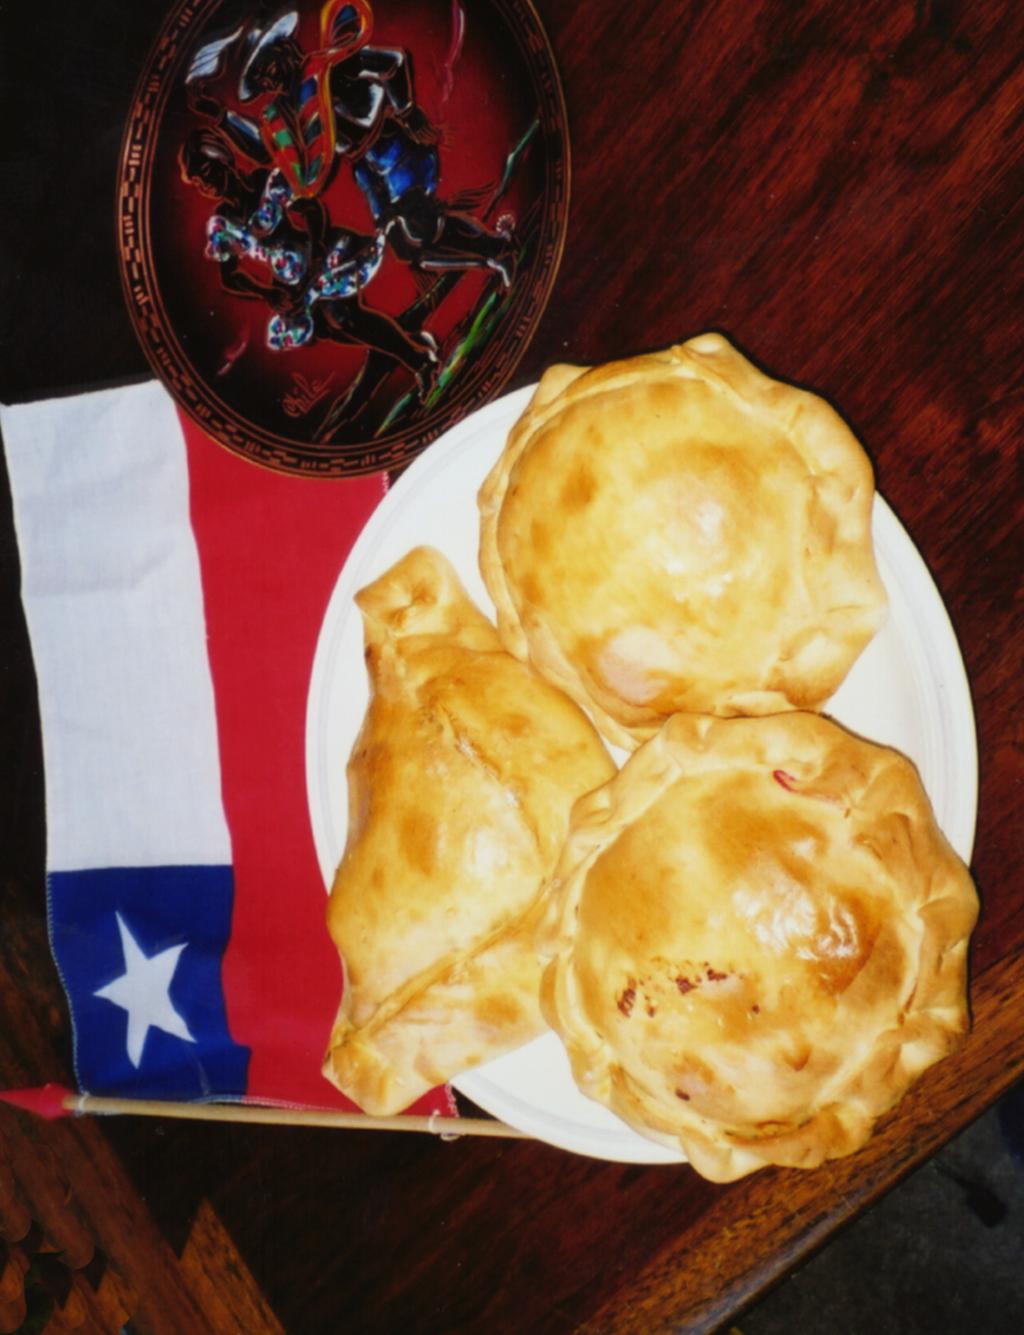 Traditions Visual 2: Empanadas, a Chilean Flag, and a Copper